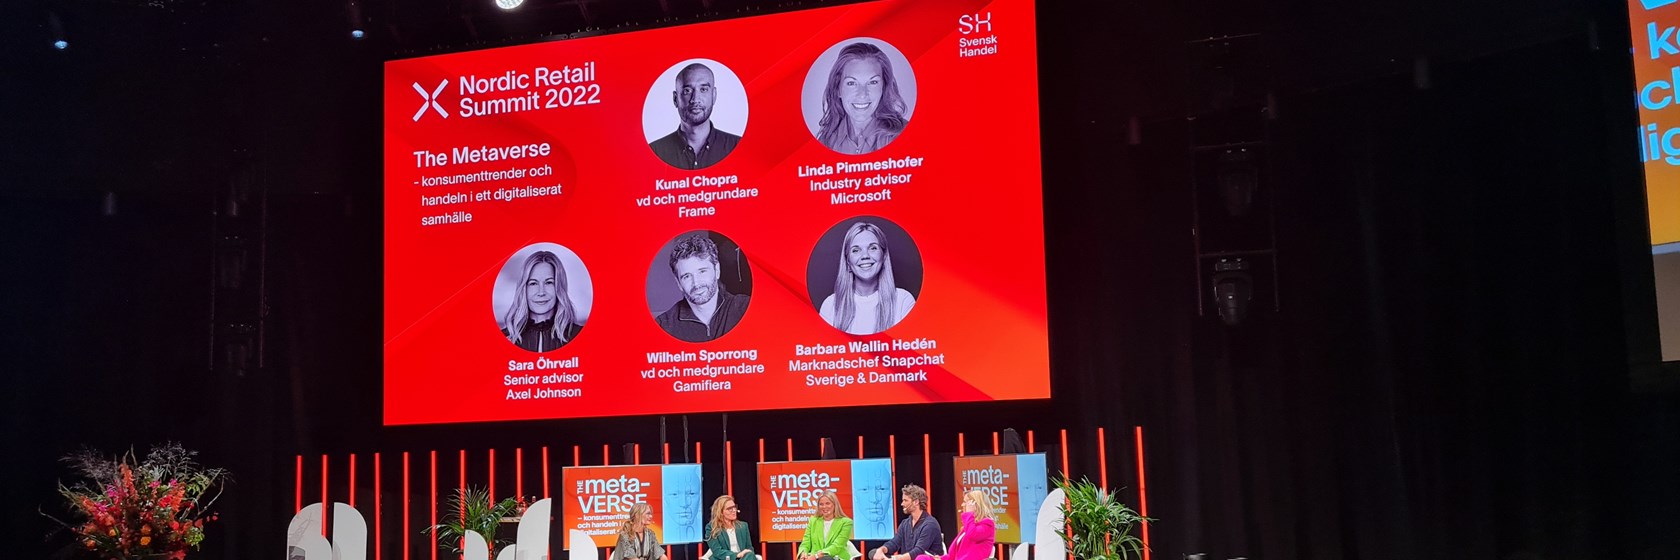 Nordic Retail Summit 2022